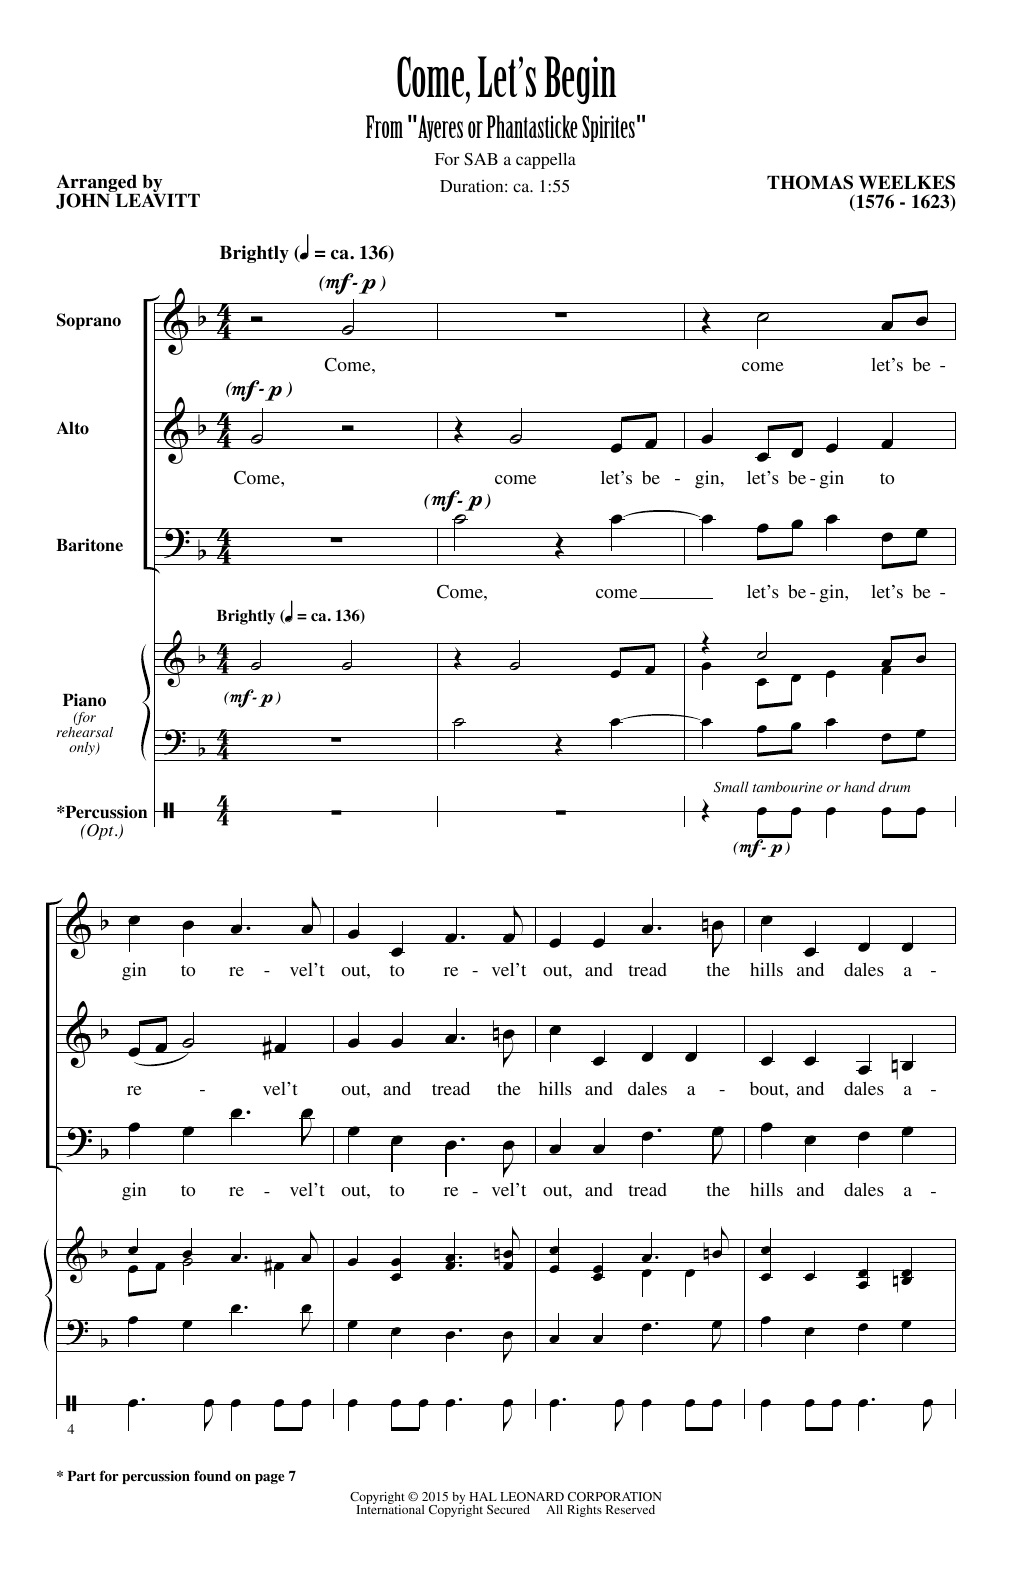 Thomas Weelkes Come, Let's Begin (arr. John Leavitt) Sheet Music Notes & Chords for SAB - Download or Print PDF